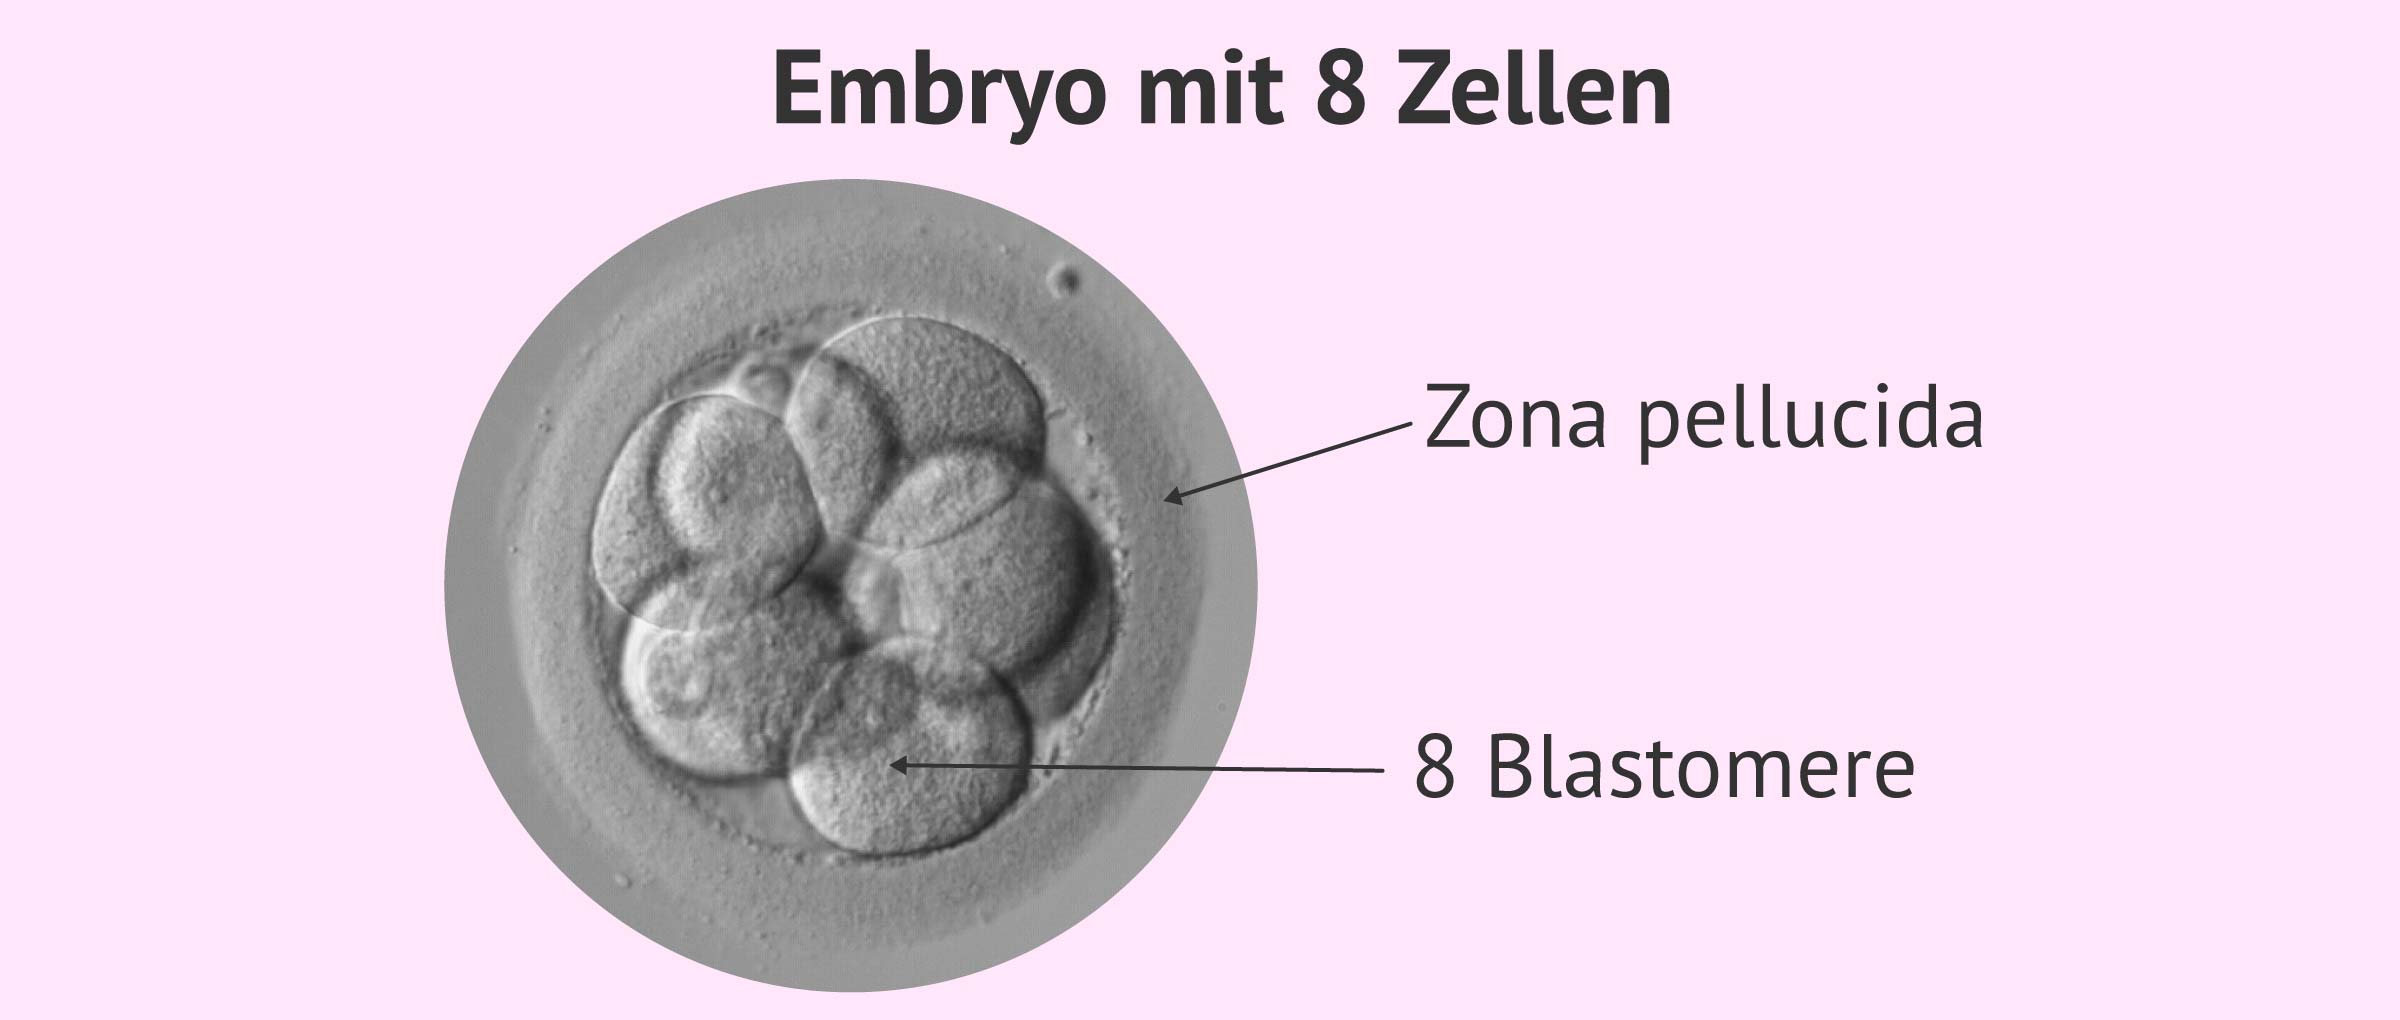 Embryo am 3. Tag mit 8 Zellen